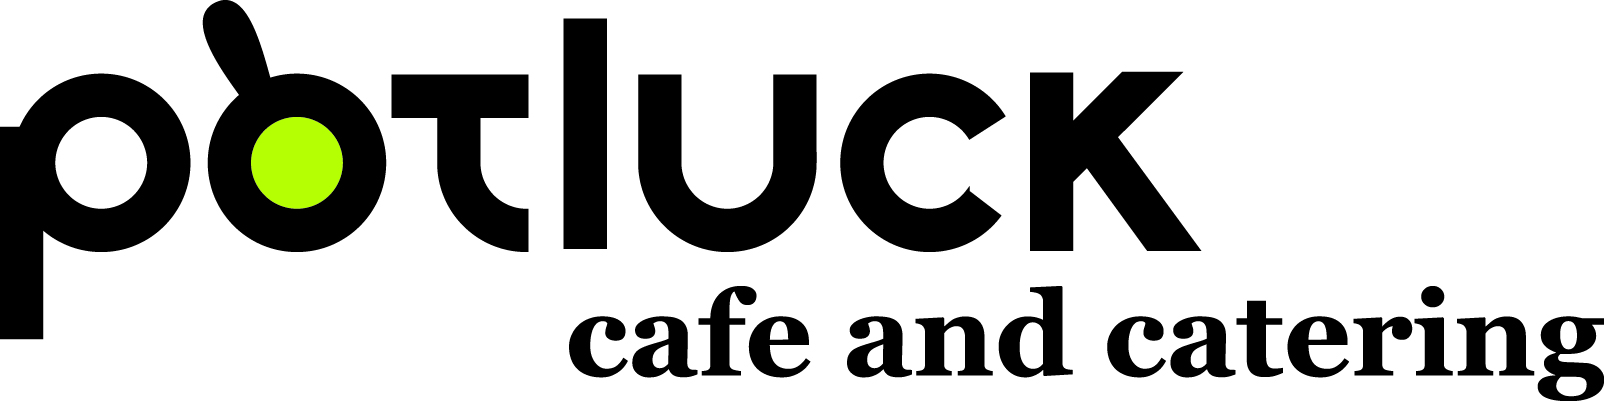 Potluck Cafe Society